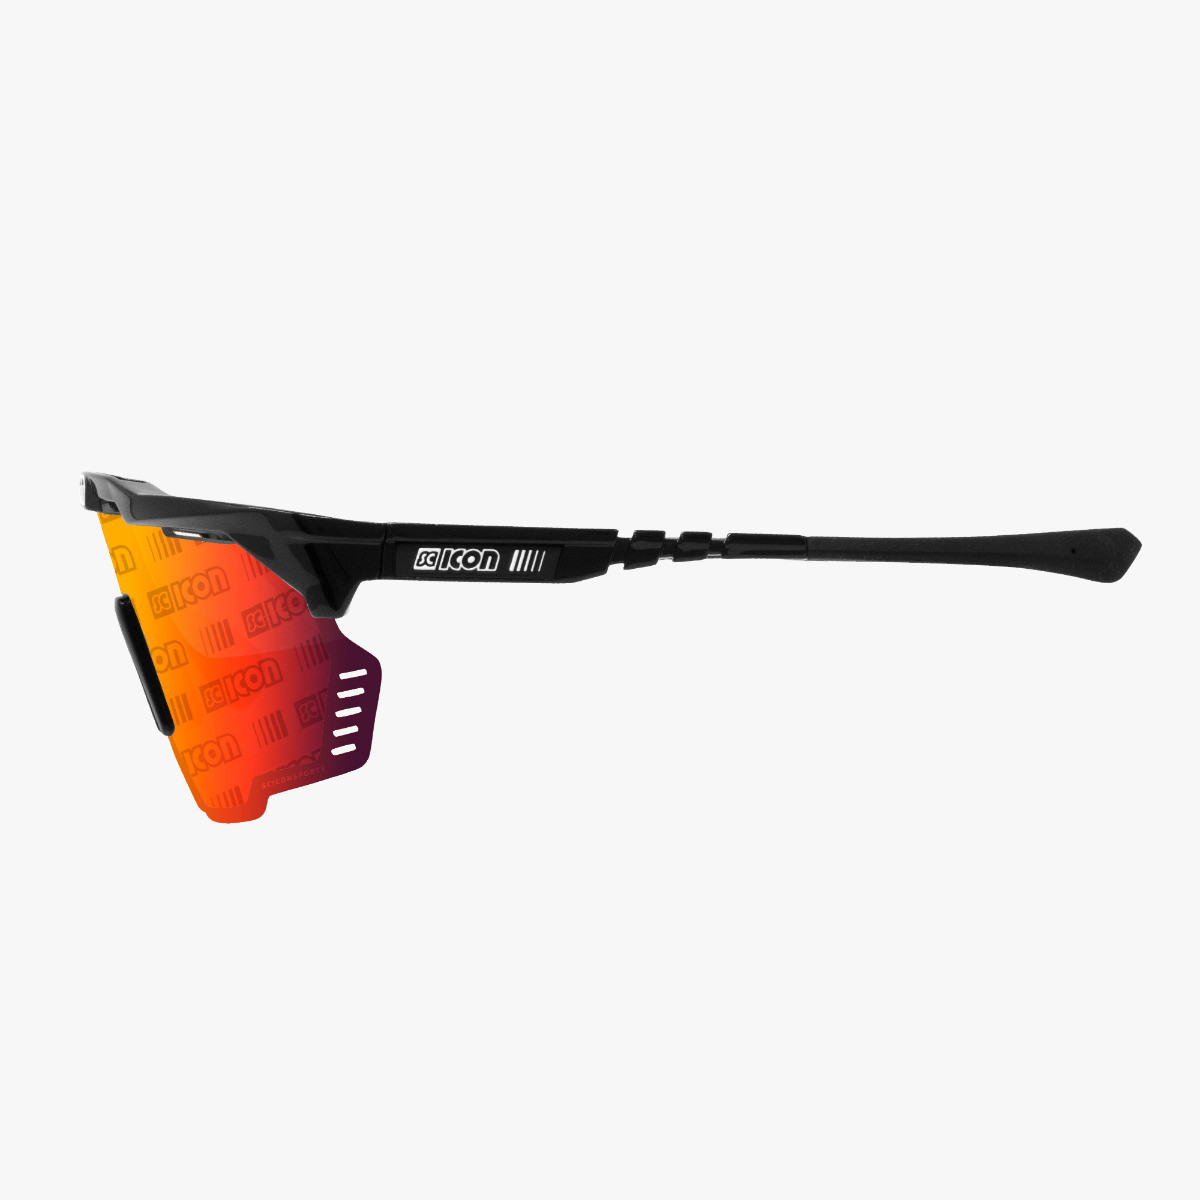 Scicon Sports | Aeroshade Kunken Performance Sunglasses - Black Gloss / Multimirror Red Monogram - EY31130200